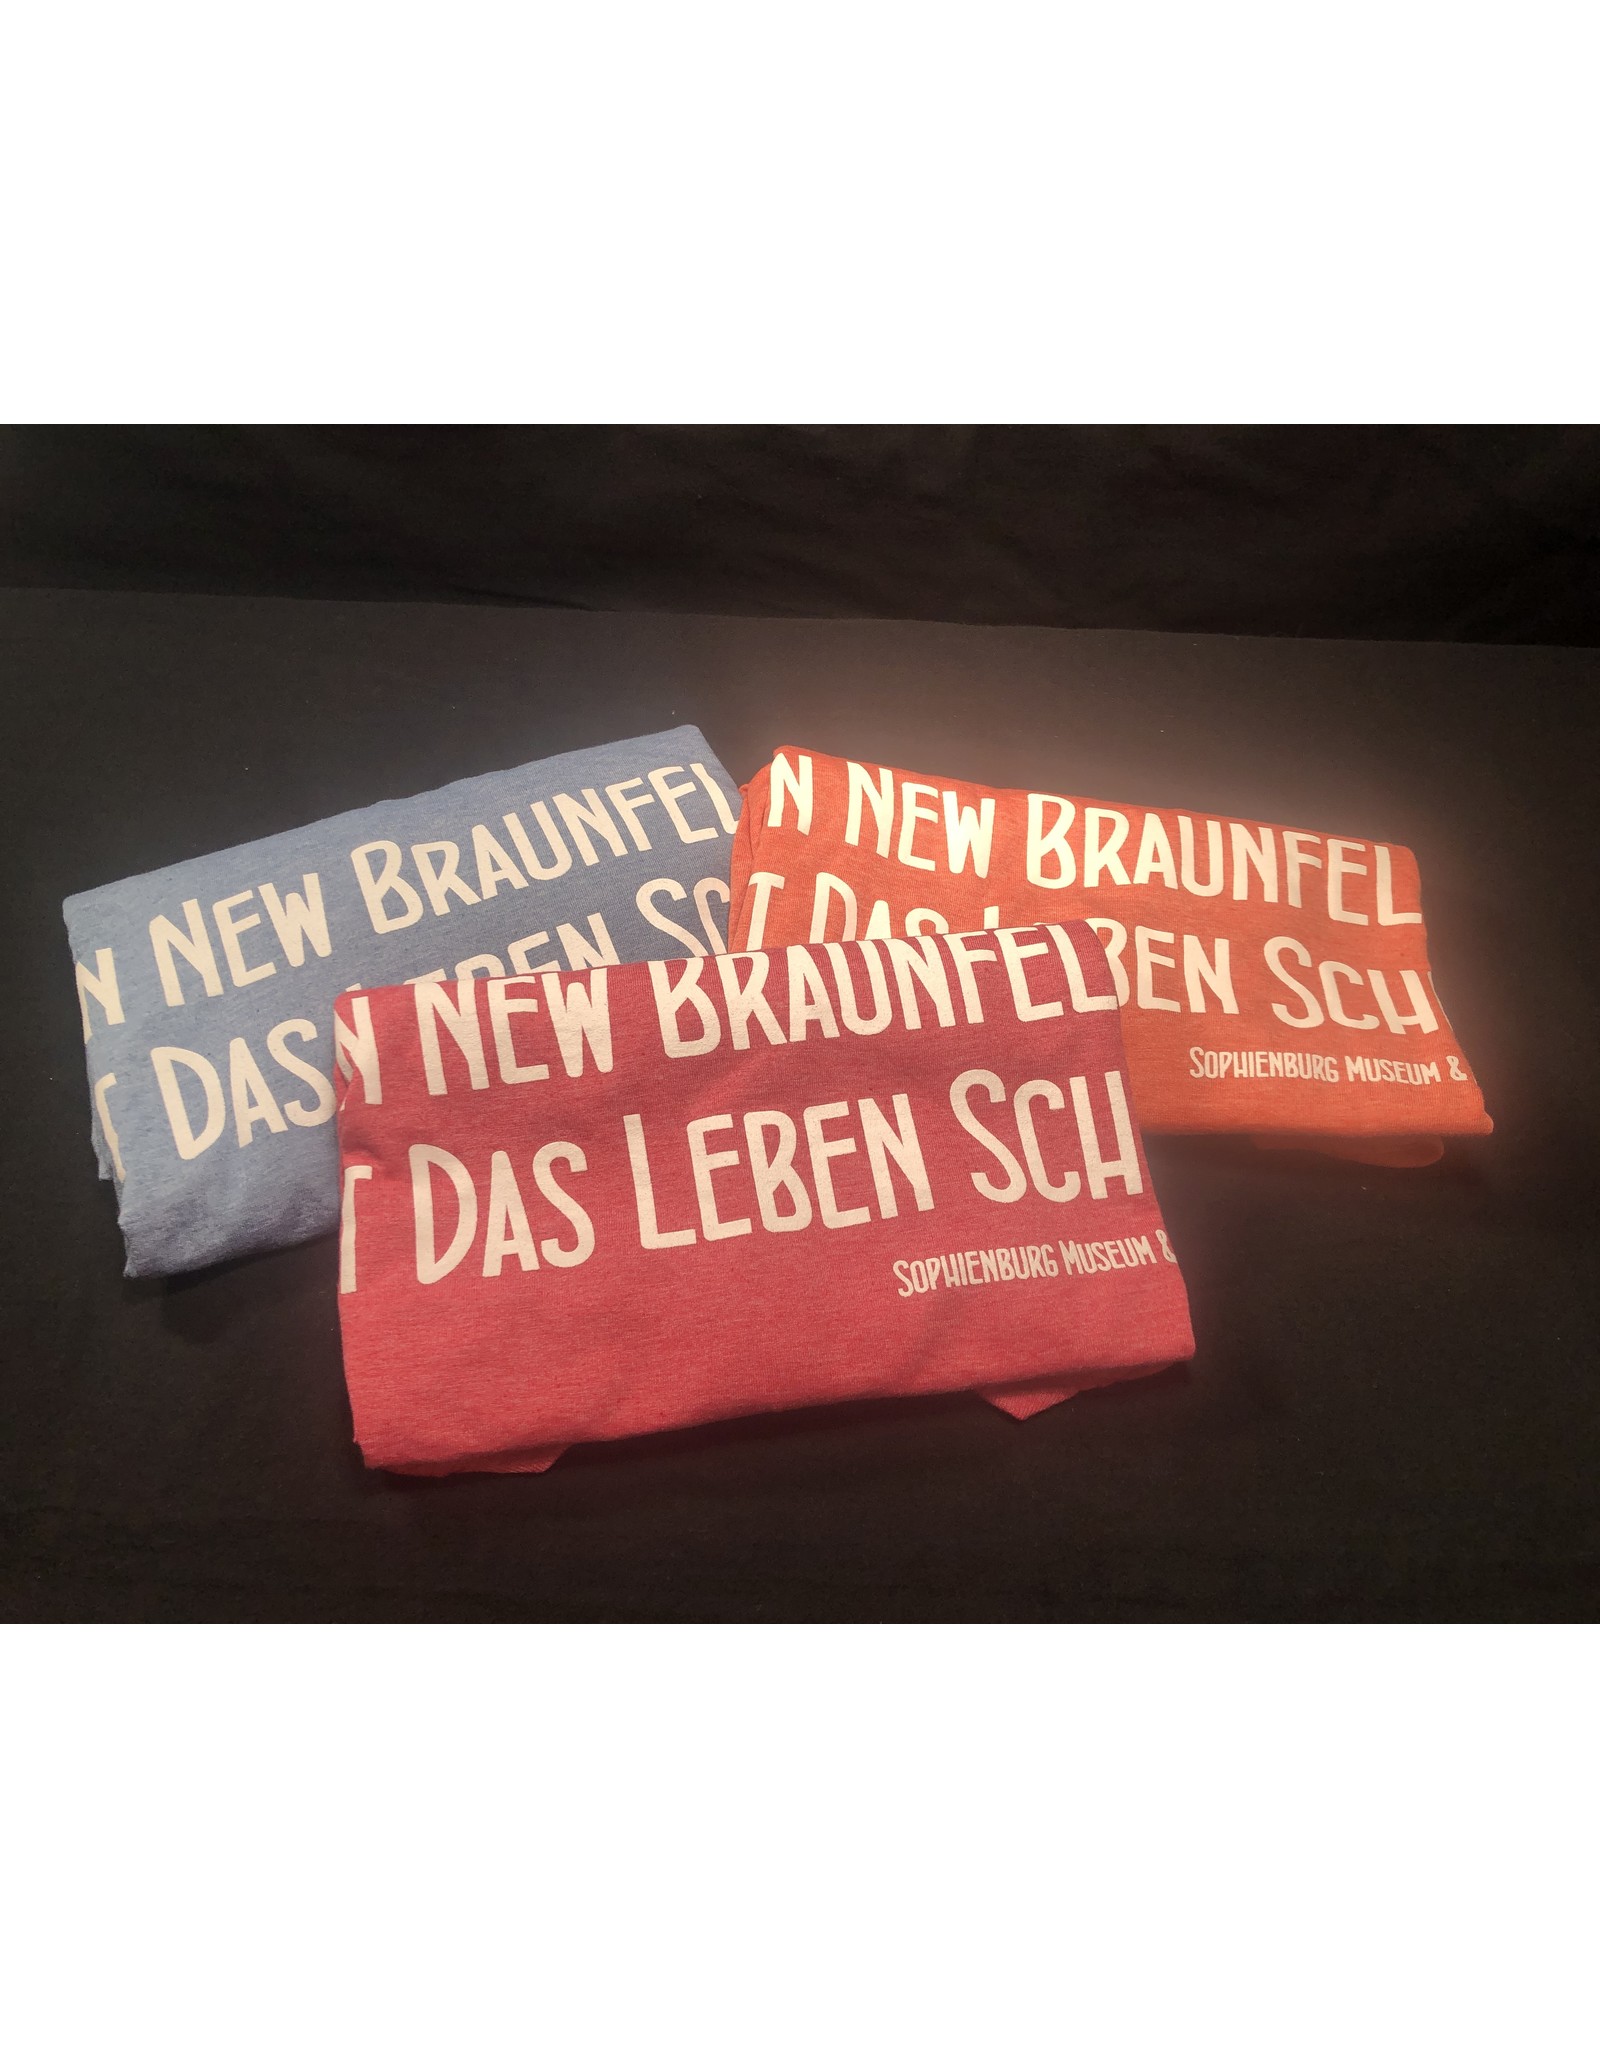 TS In New Braunfels soft